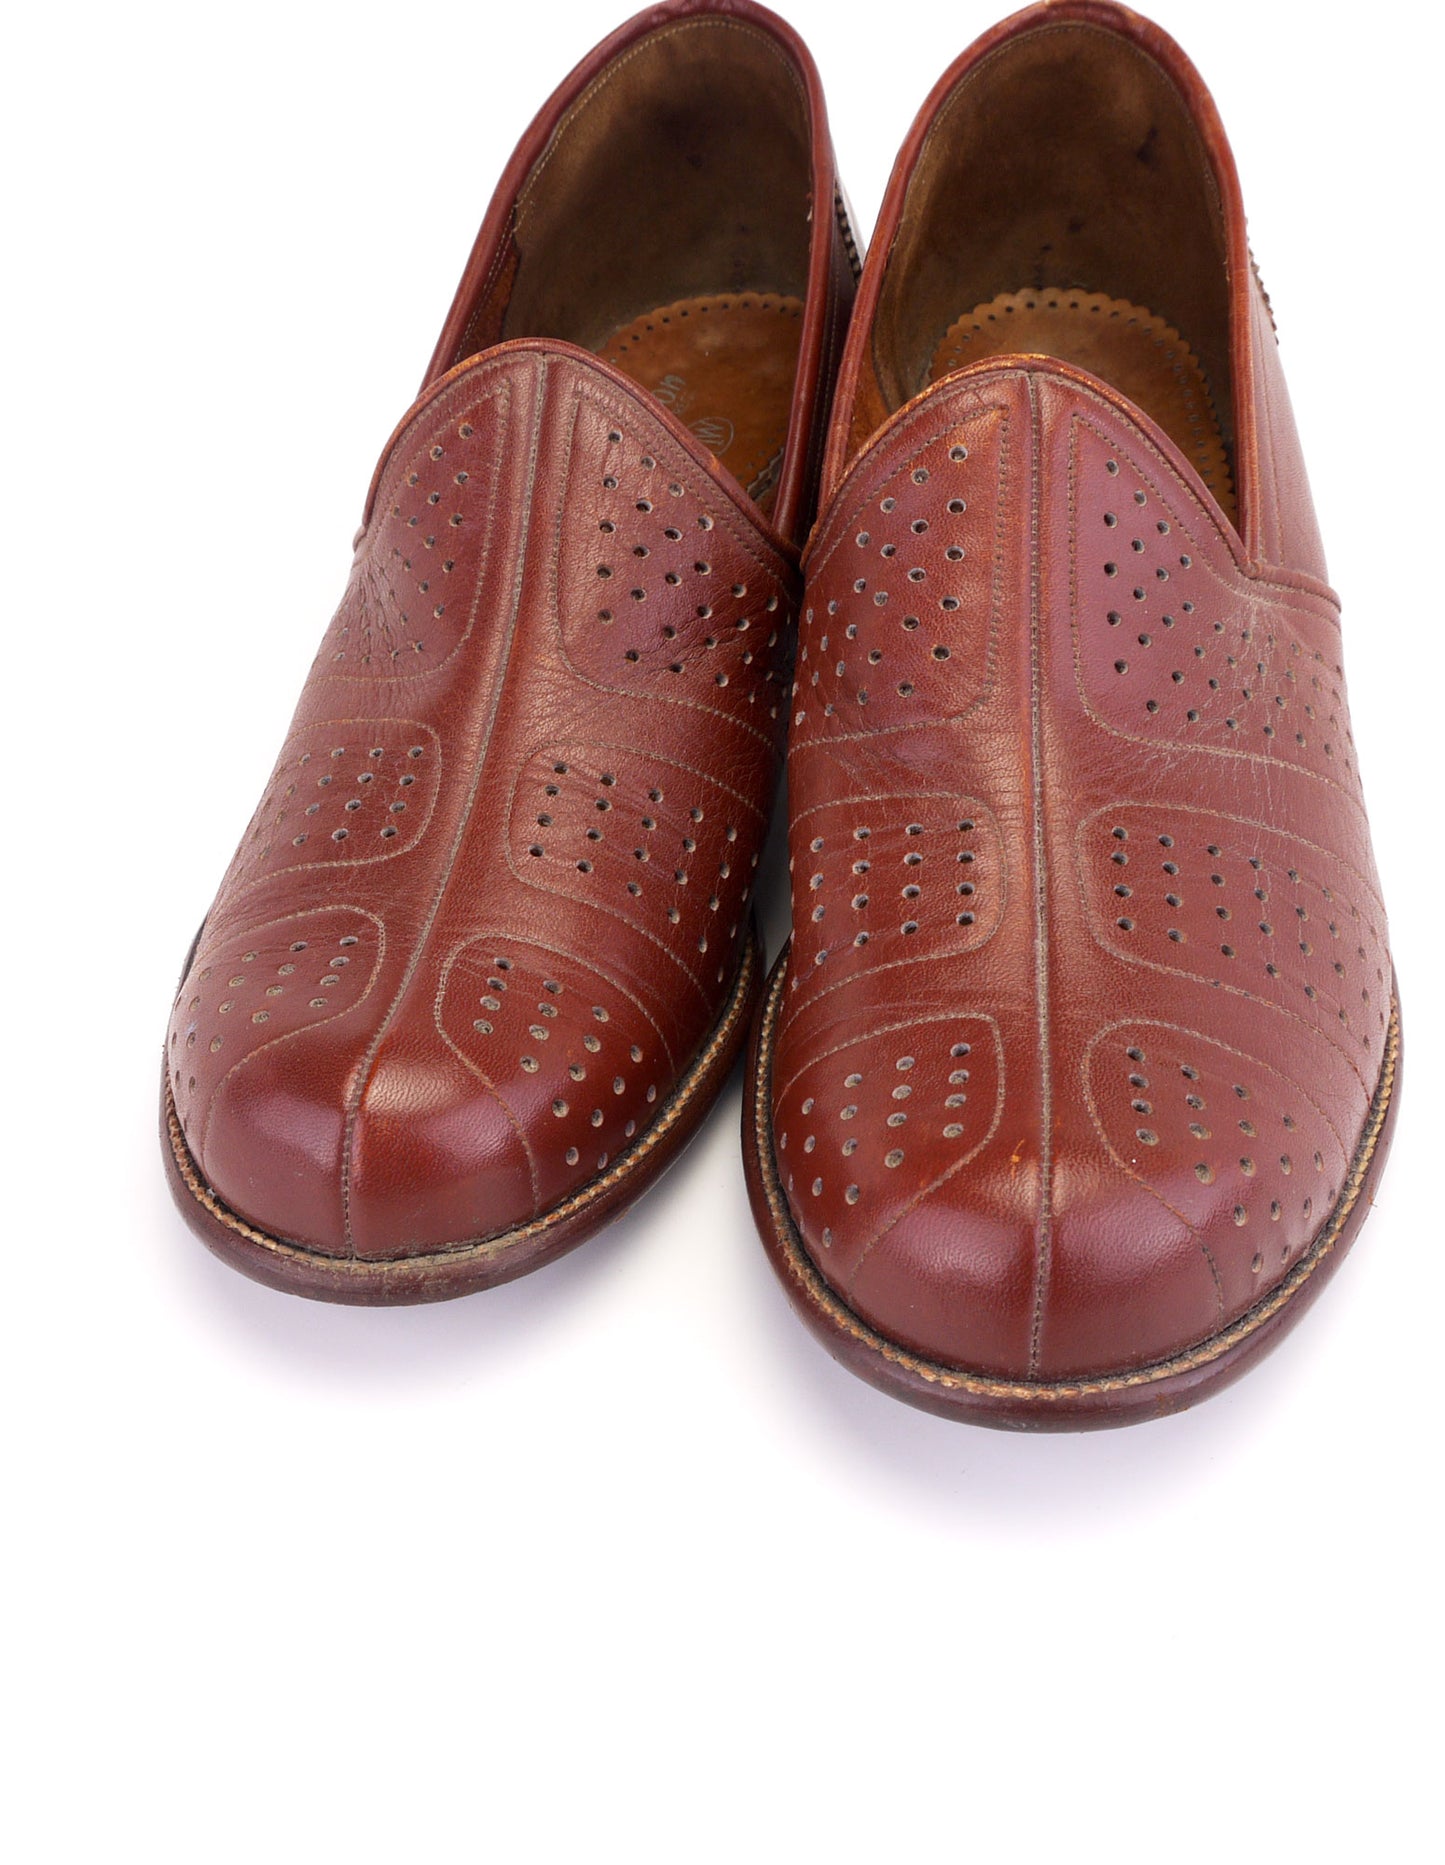 Fab 1940s Walking Shoes by Freeman Hardy & Willis UK 5.5